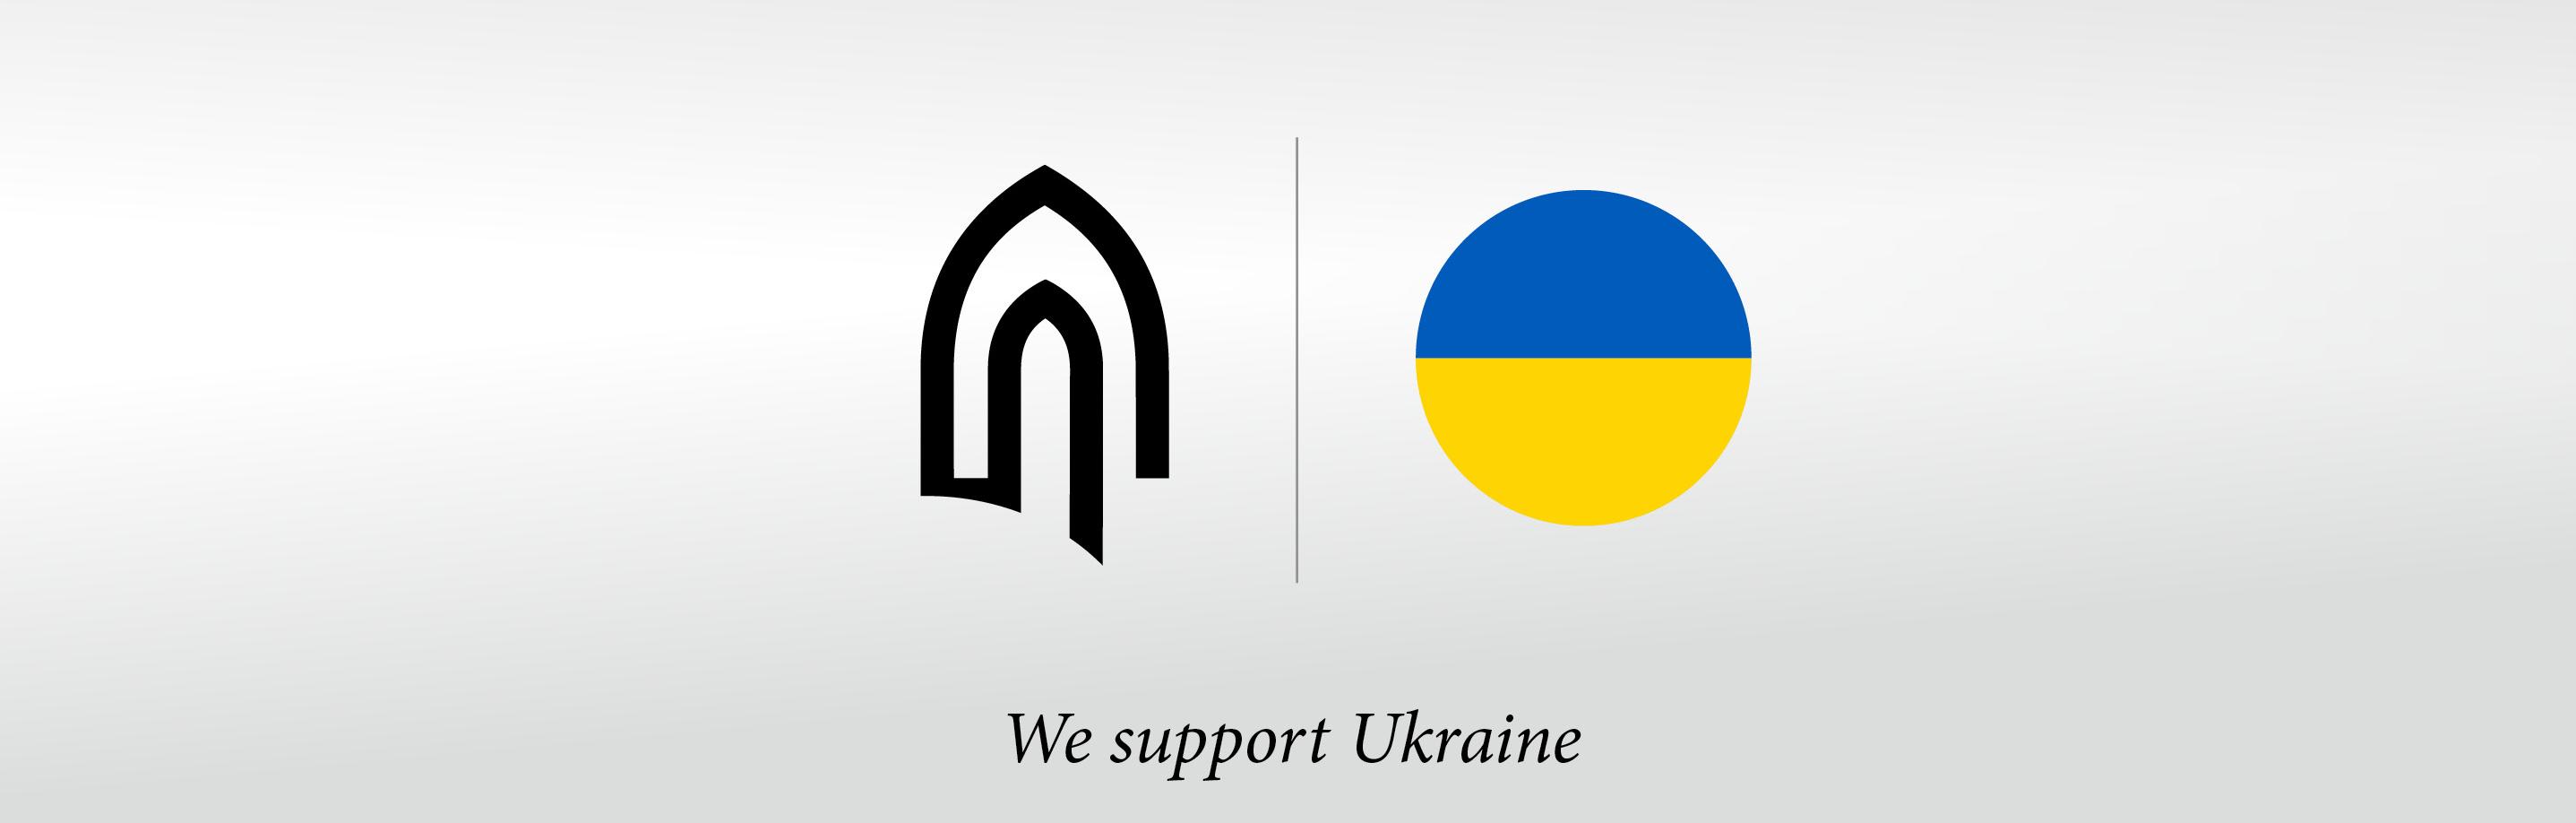 Tallinn University: we support Ukraine visual